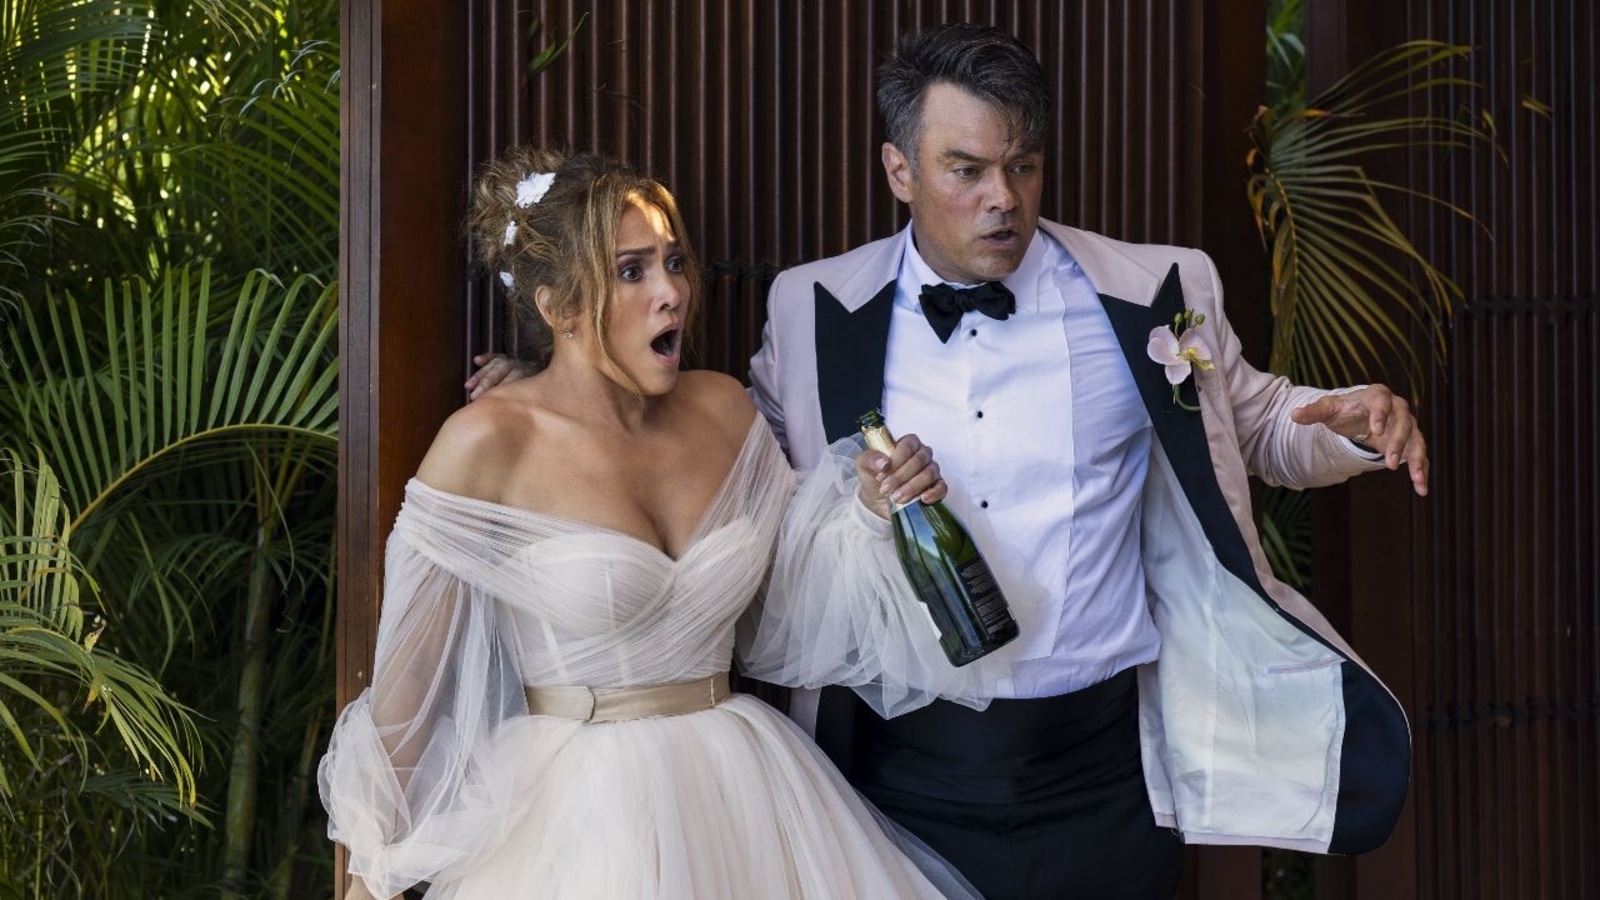 Shotgun Wedding movie review: This vanilla rom-com needed more Jennifer Coolidge